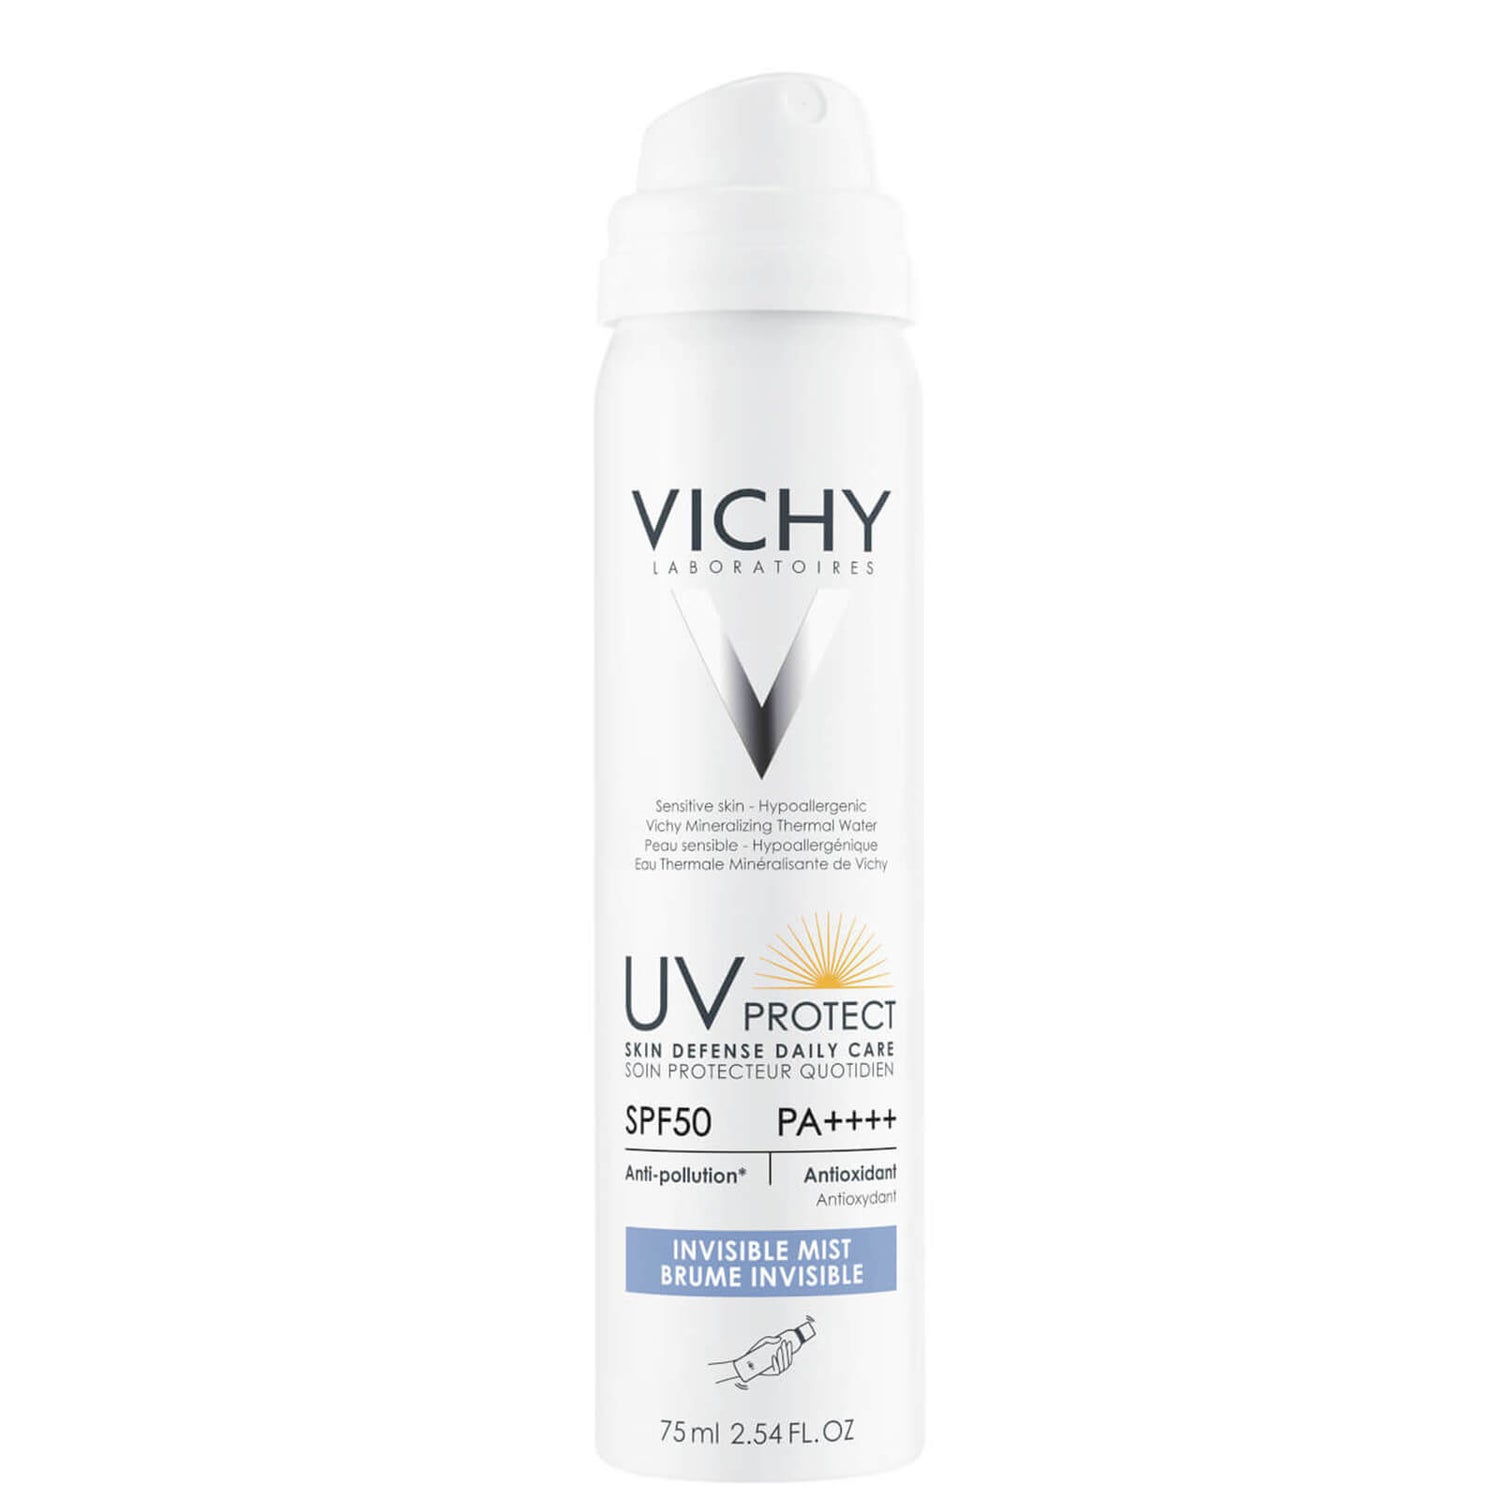 VICHY UV Protect UV Protect Skin Defense Daily Care Invisible Mist 75ml